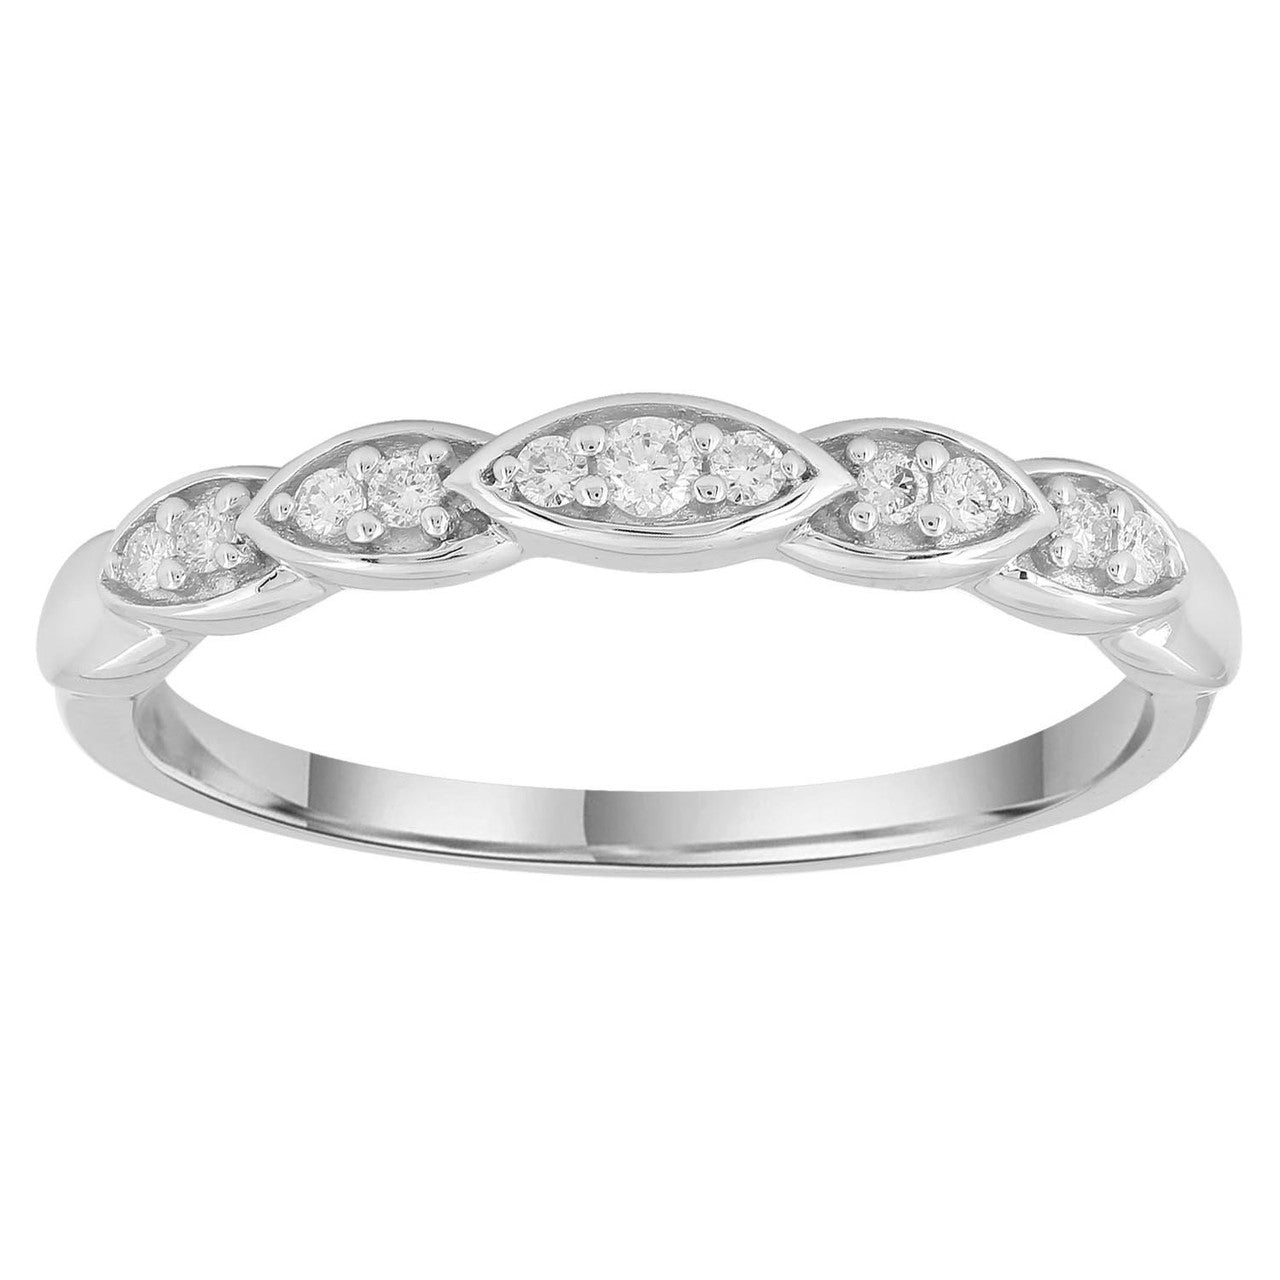 Ice Jewellery Band Ring with 0.10ct Diamonds in 9K White Gold -  R-40123-010-W | Ice Jewellery Australia